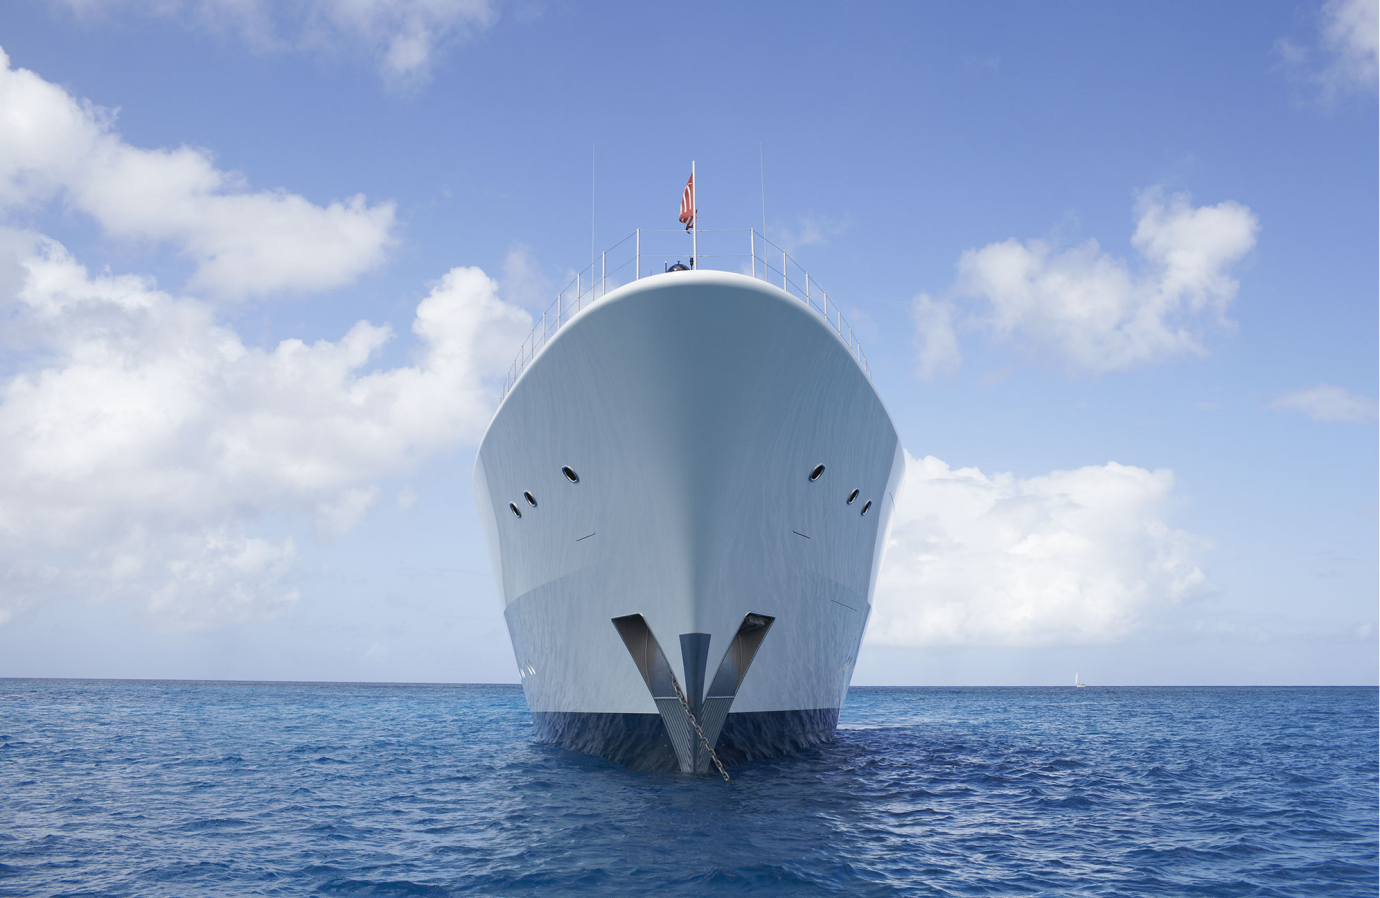 Royal Van Lent shipyard - Yacht SECRET — Yacht Charter